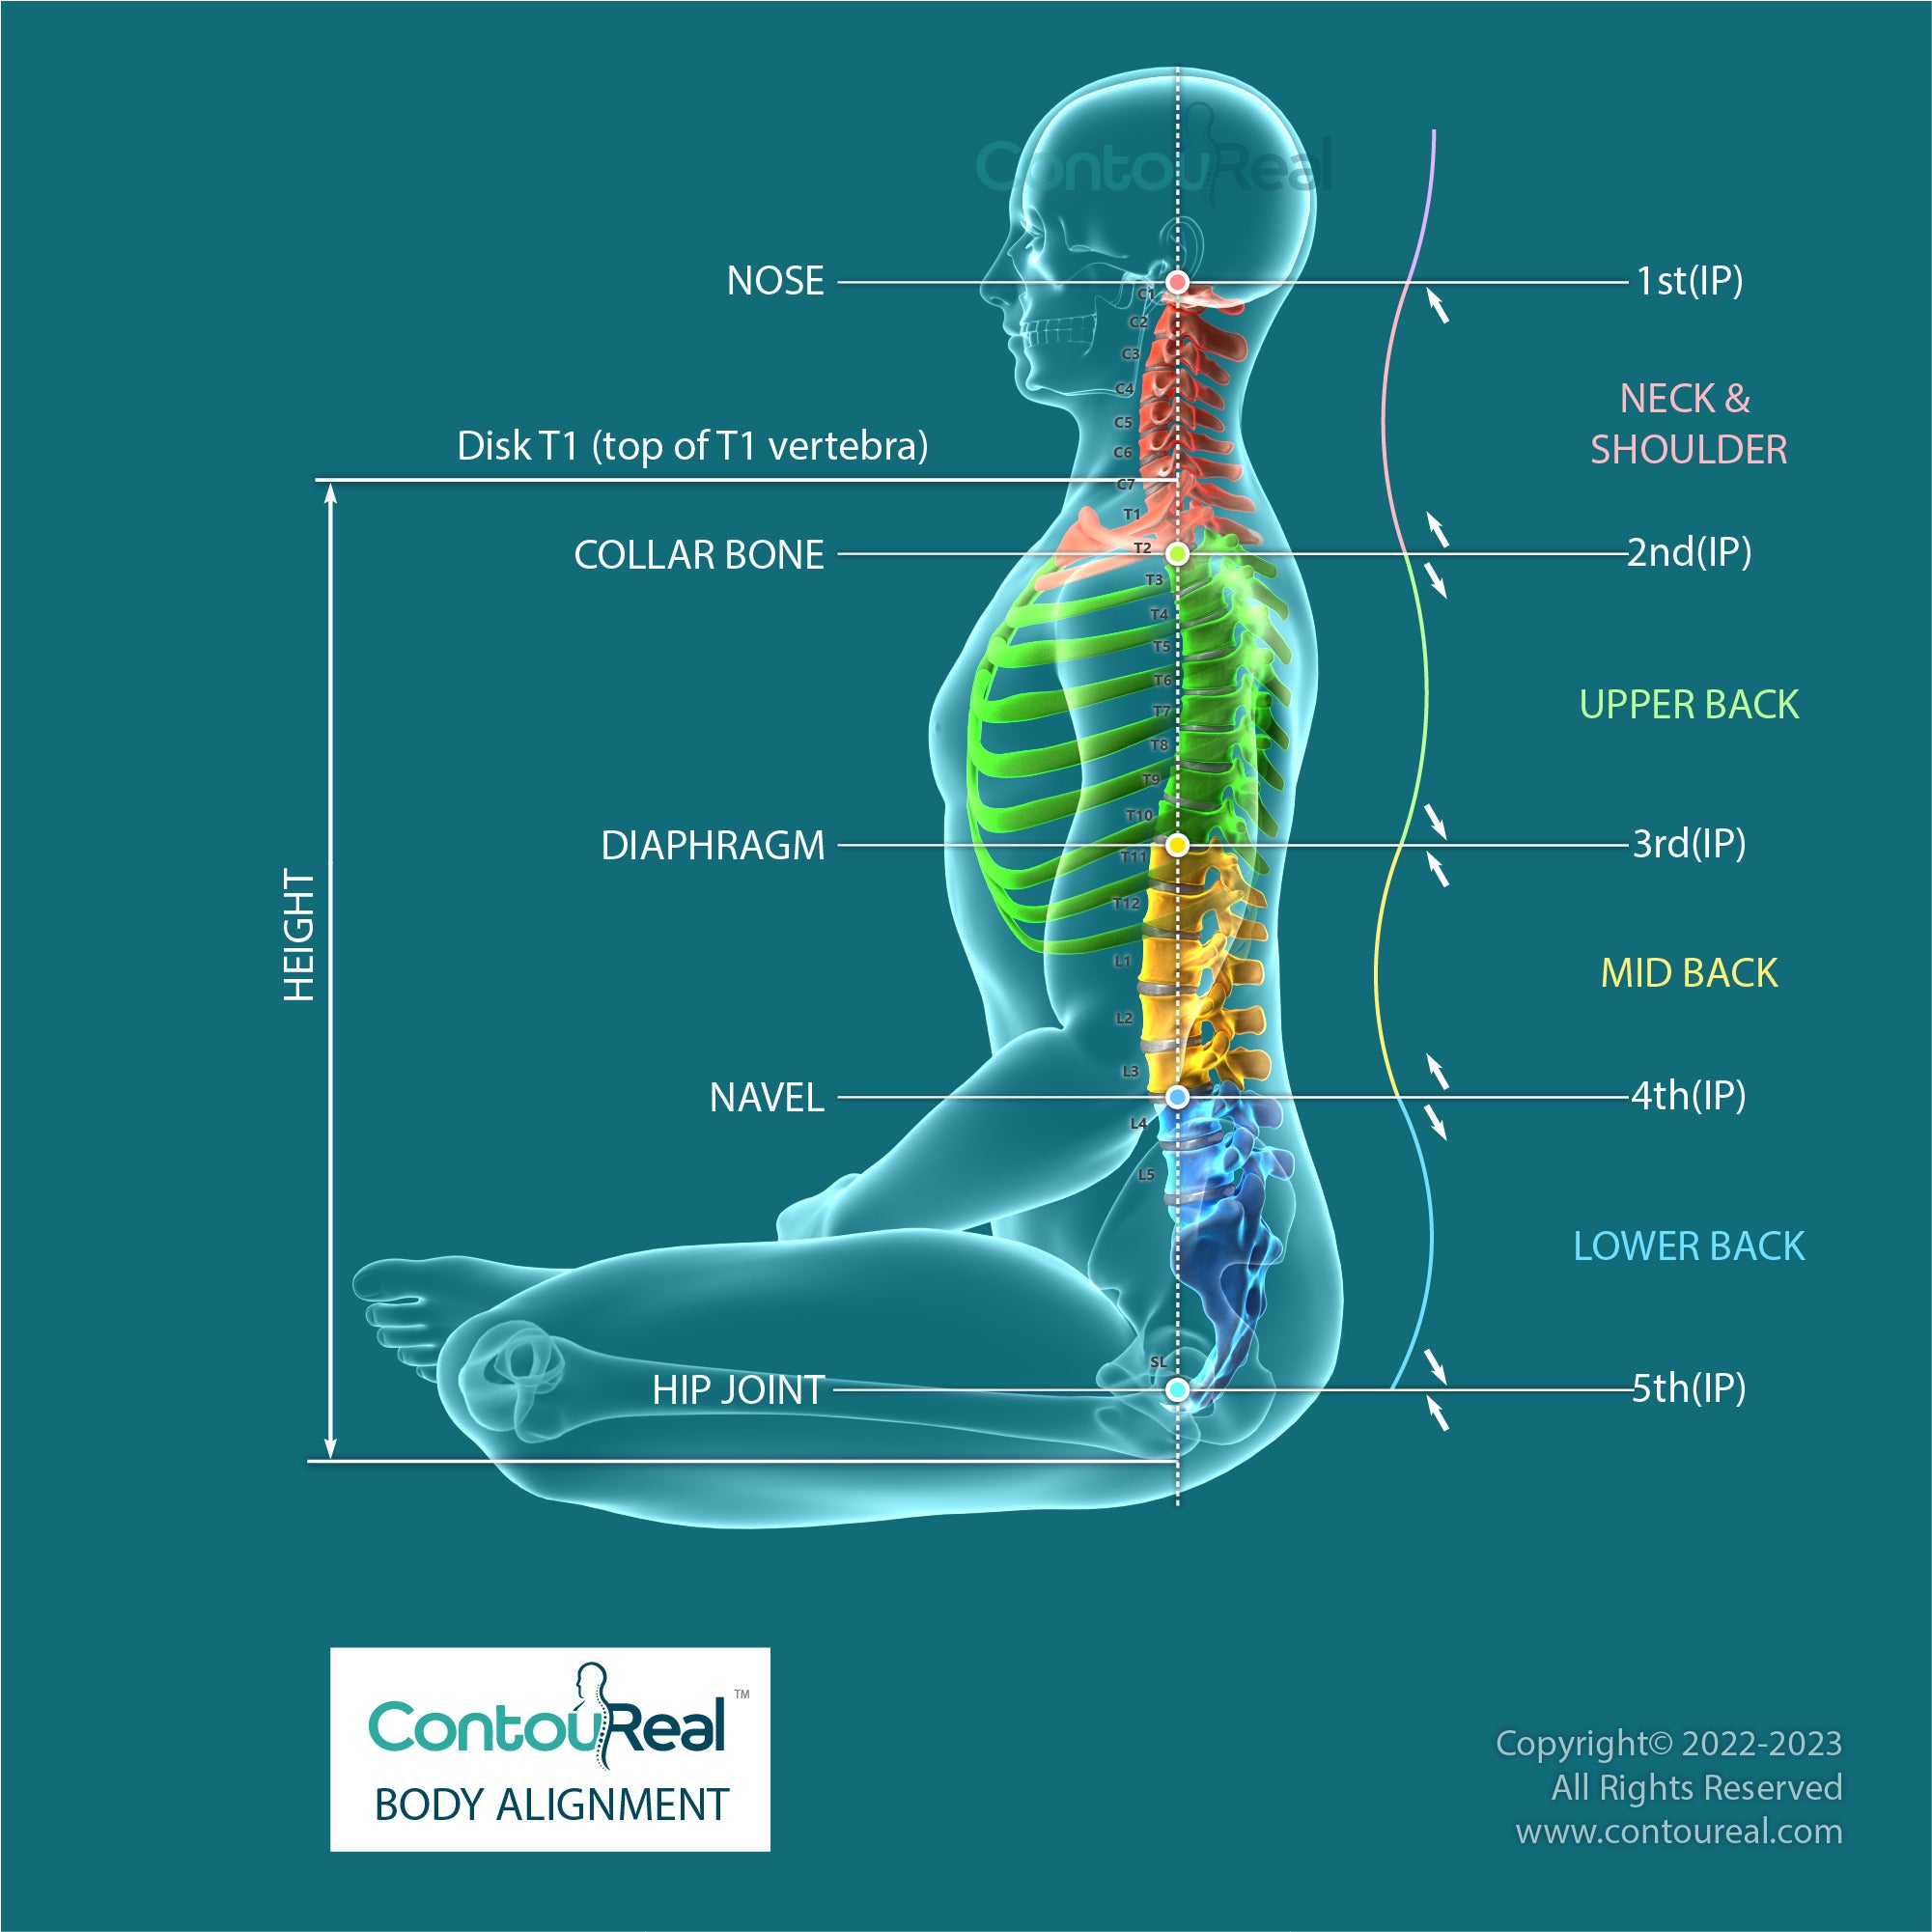 Spine’s natural curves